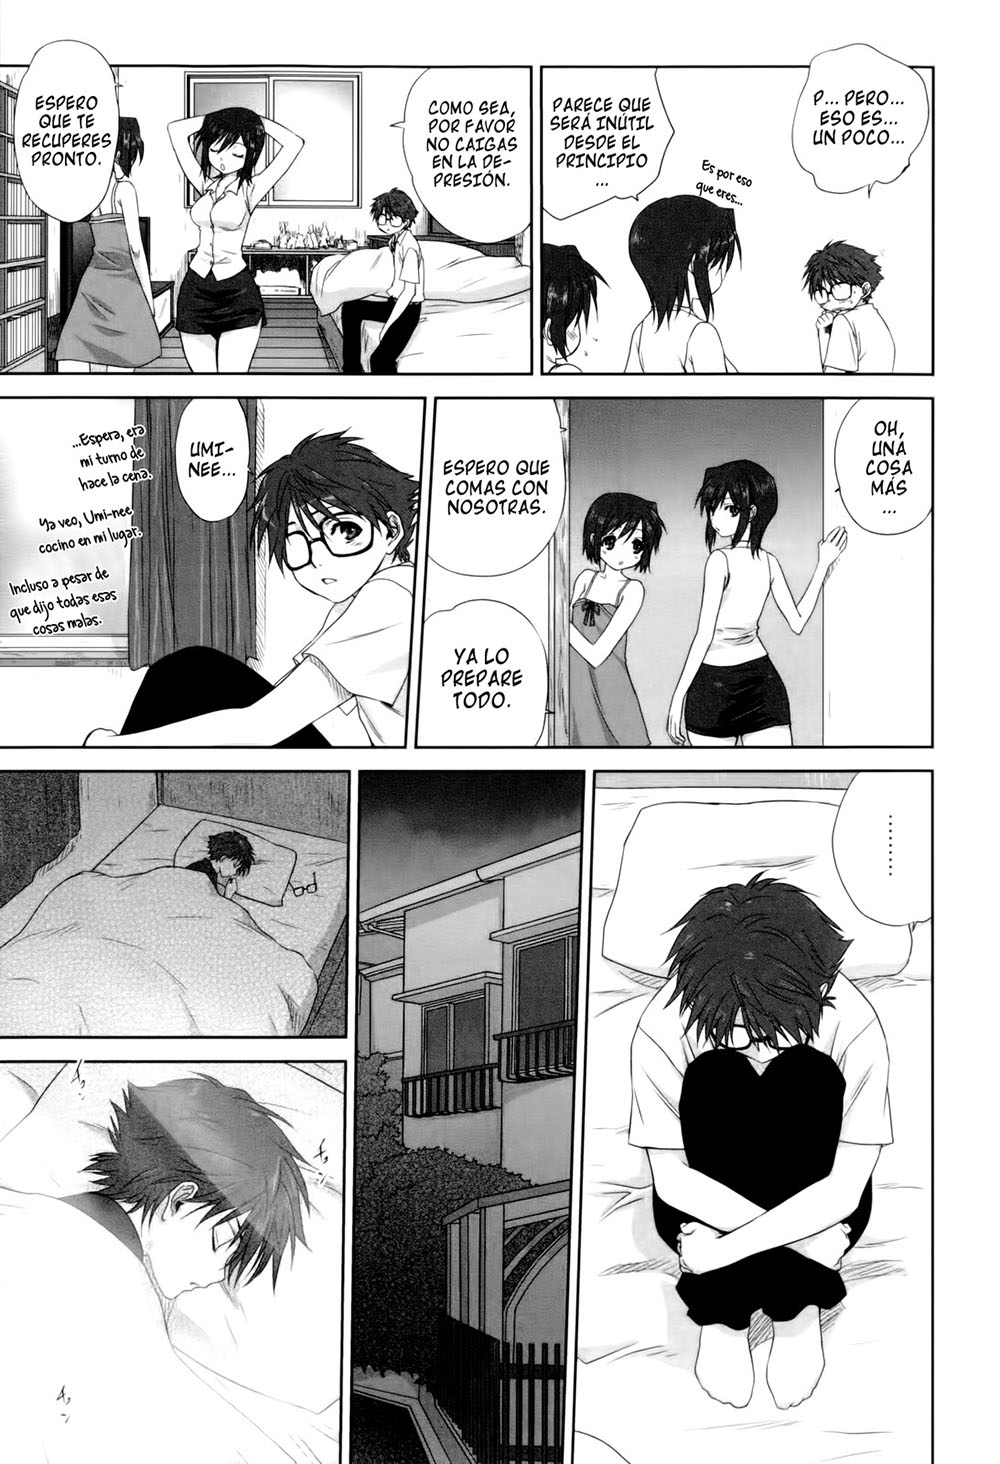 La Familia al Completo #1 - 7 - Comics Porno - Hentai Manga - Cartoon XXX